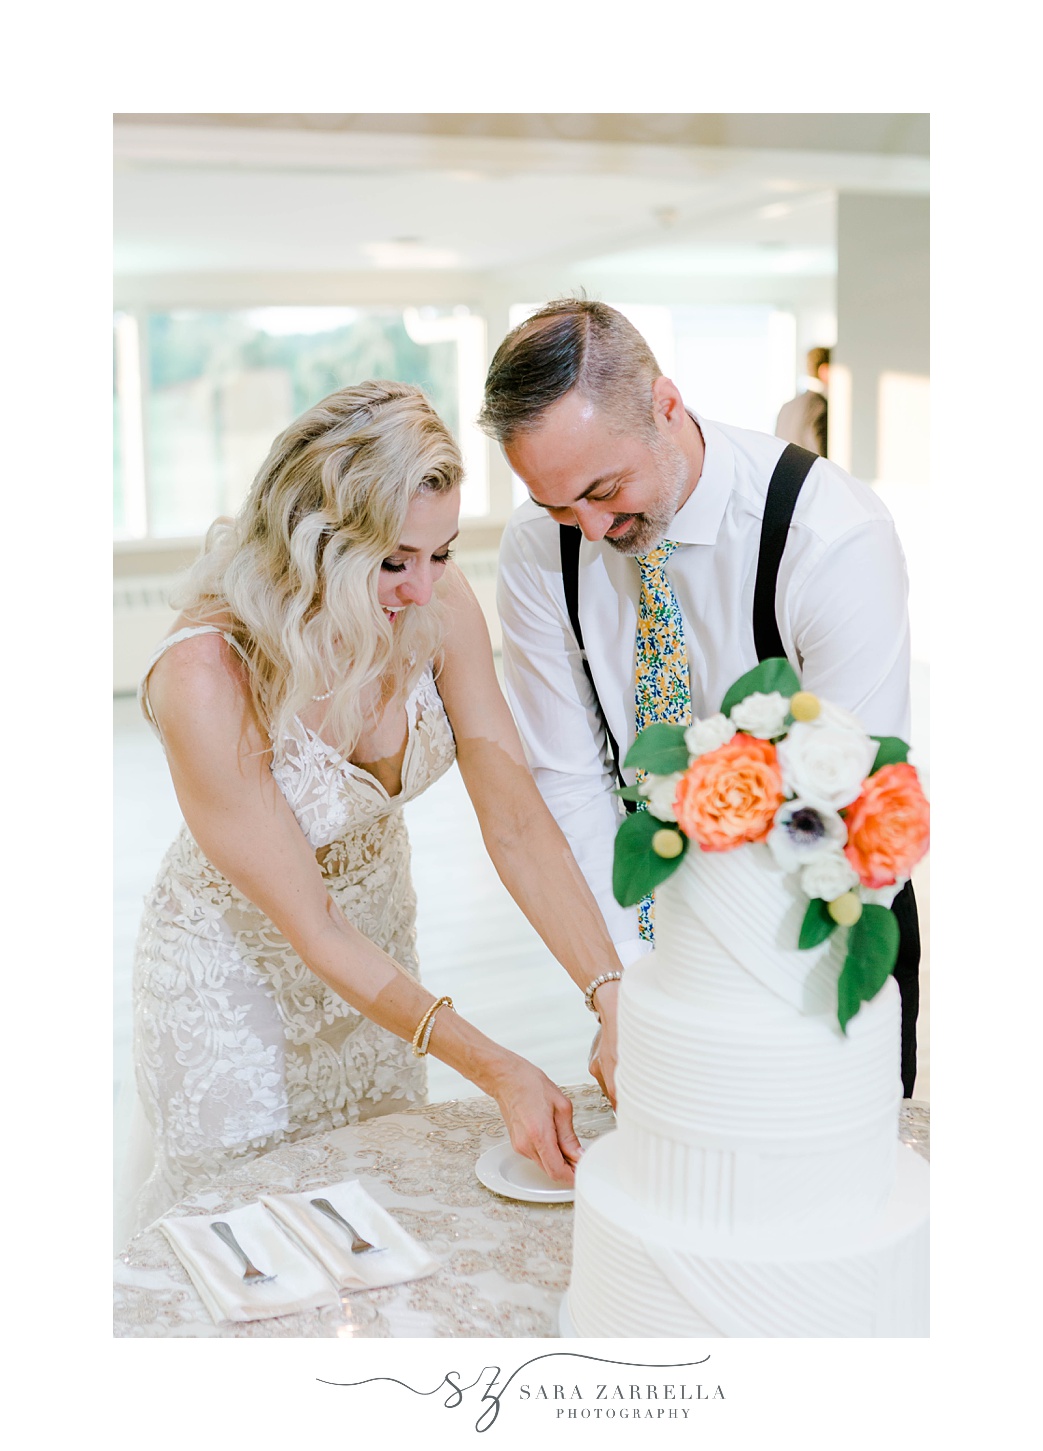 newlyweds cut wedding cake with orange flowers during Sutton MA wedding reception